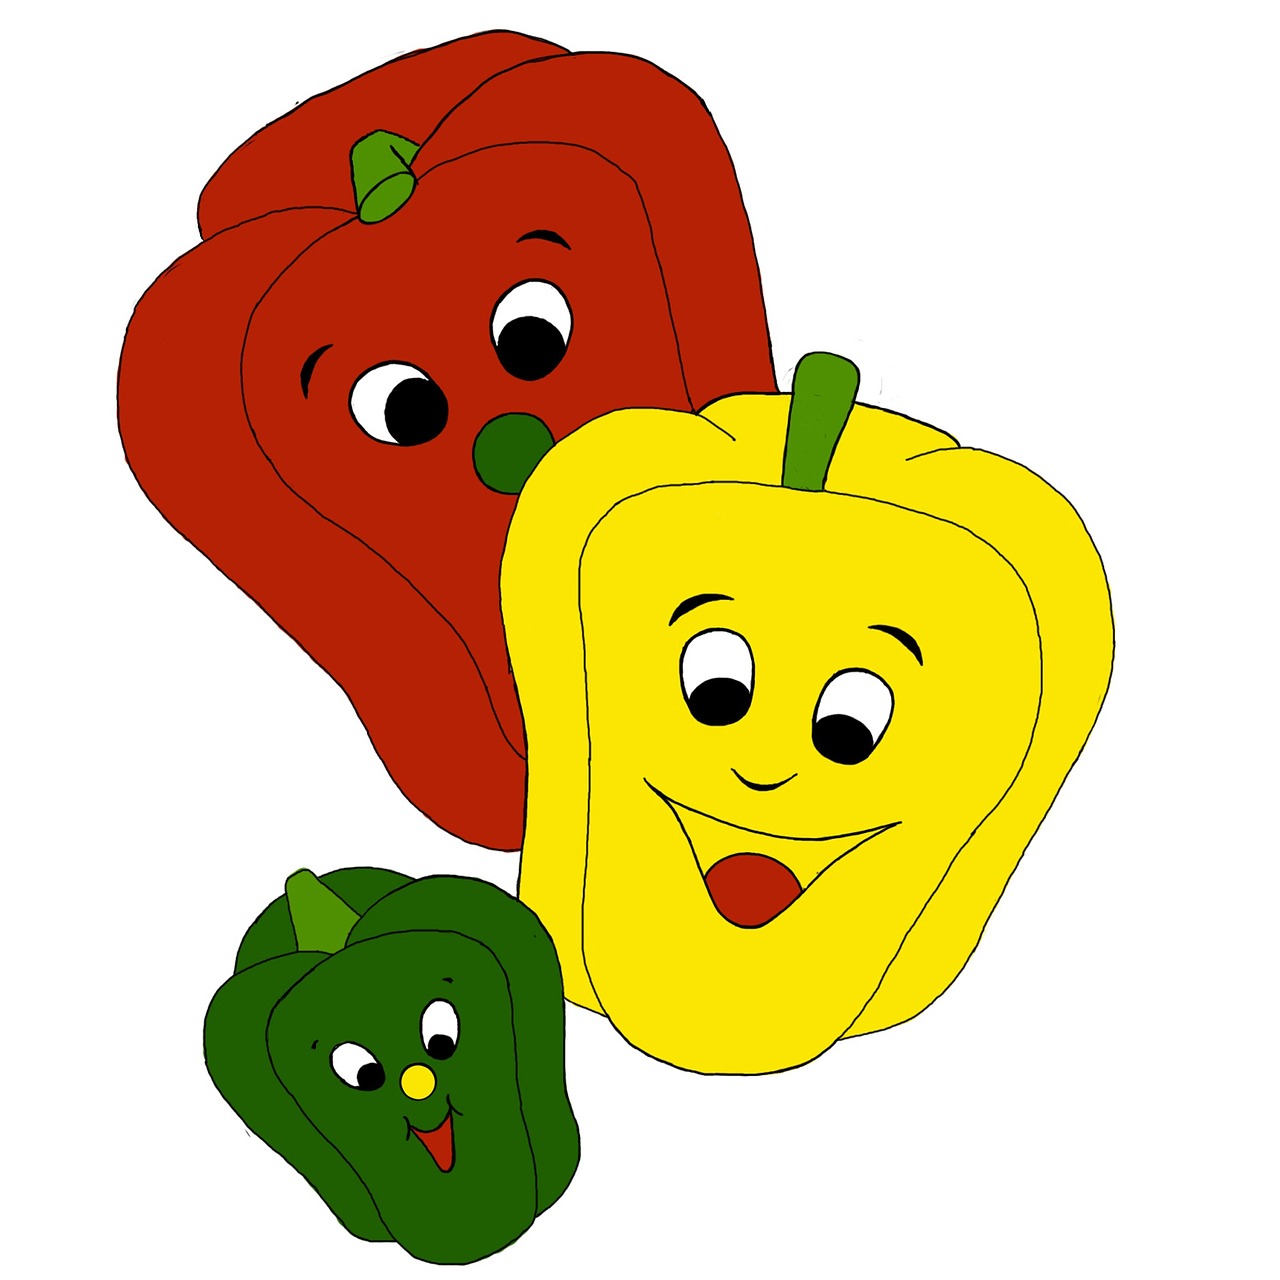 paprika vegetables drawing free photo